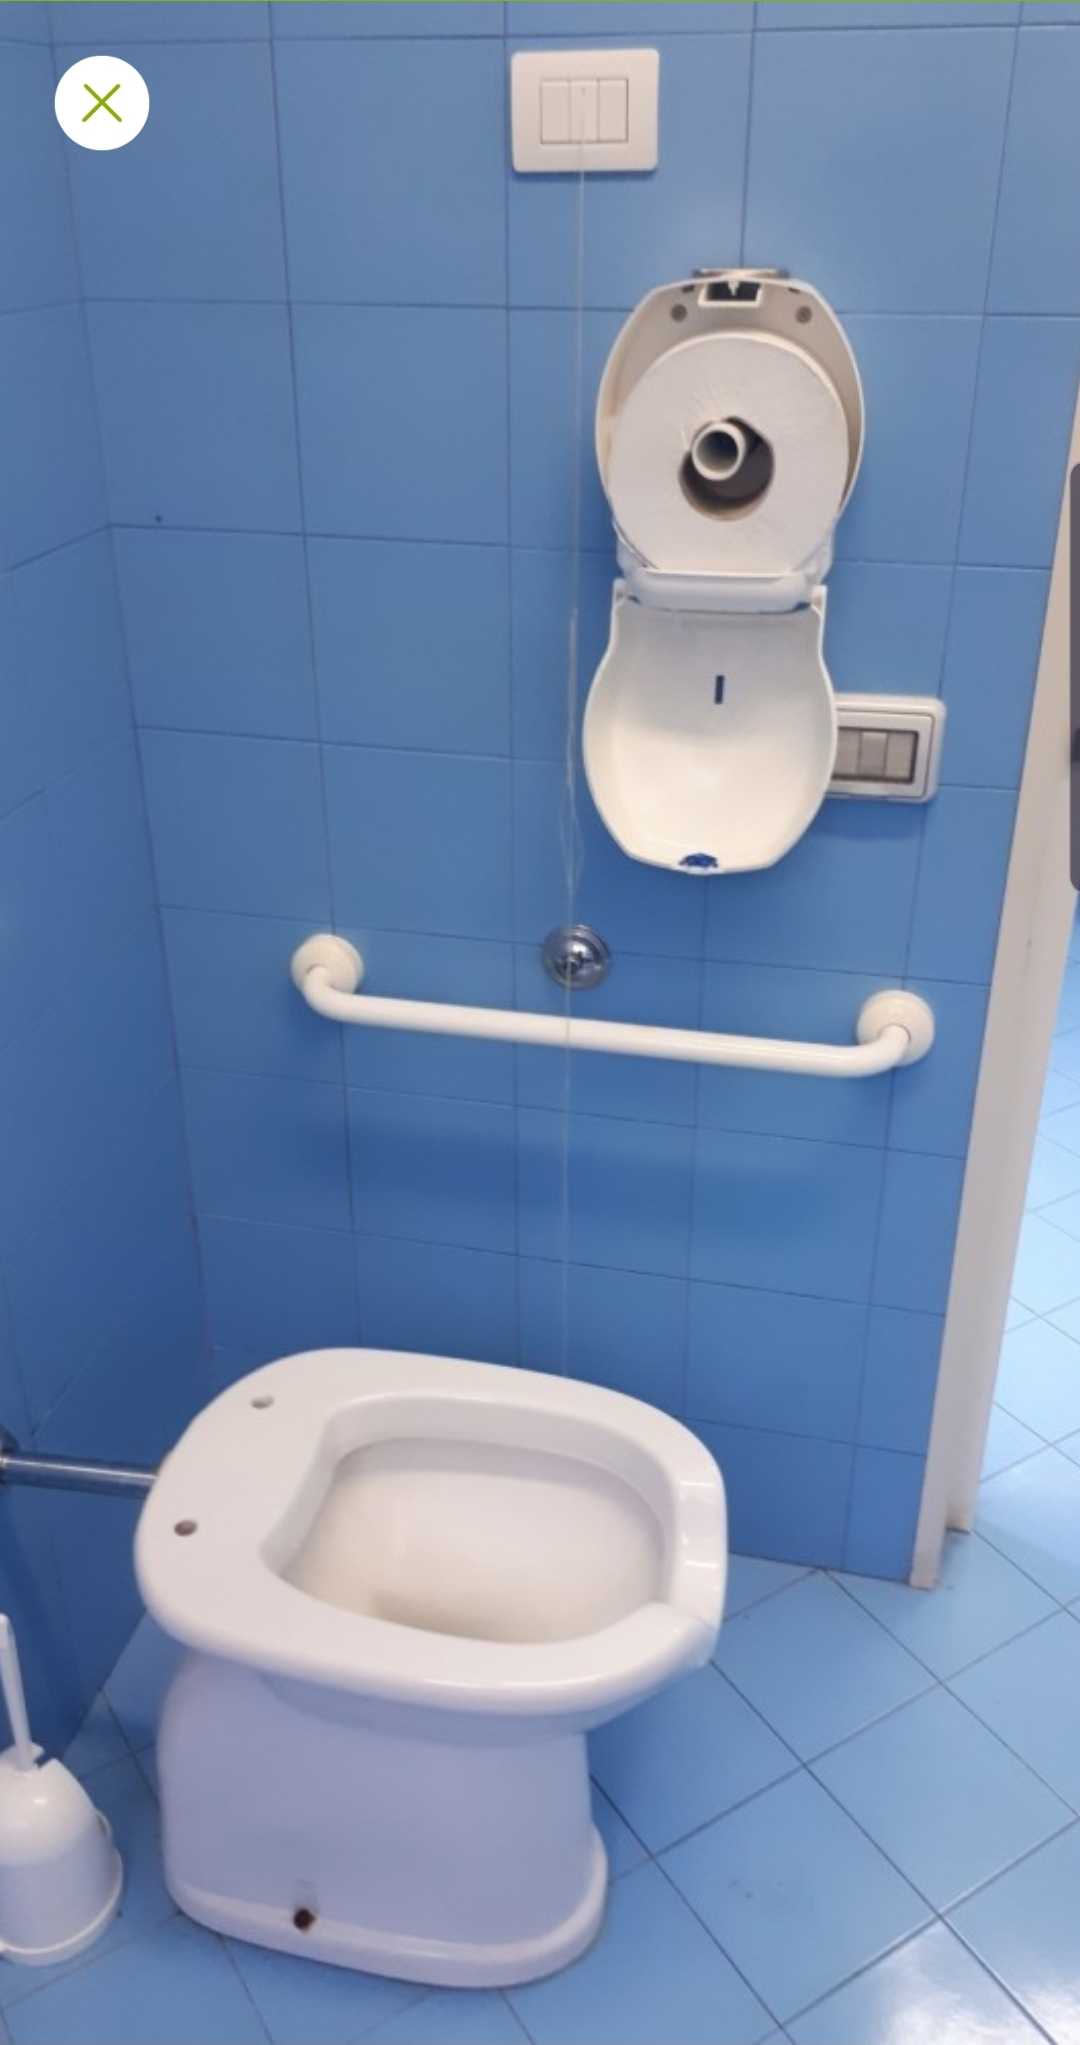 Wheelchair accessible bathroom Herculaneum left handle bar